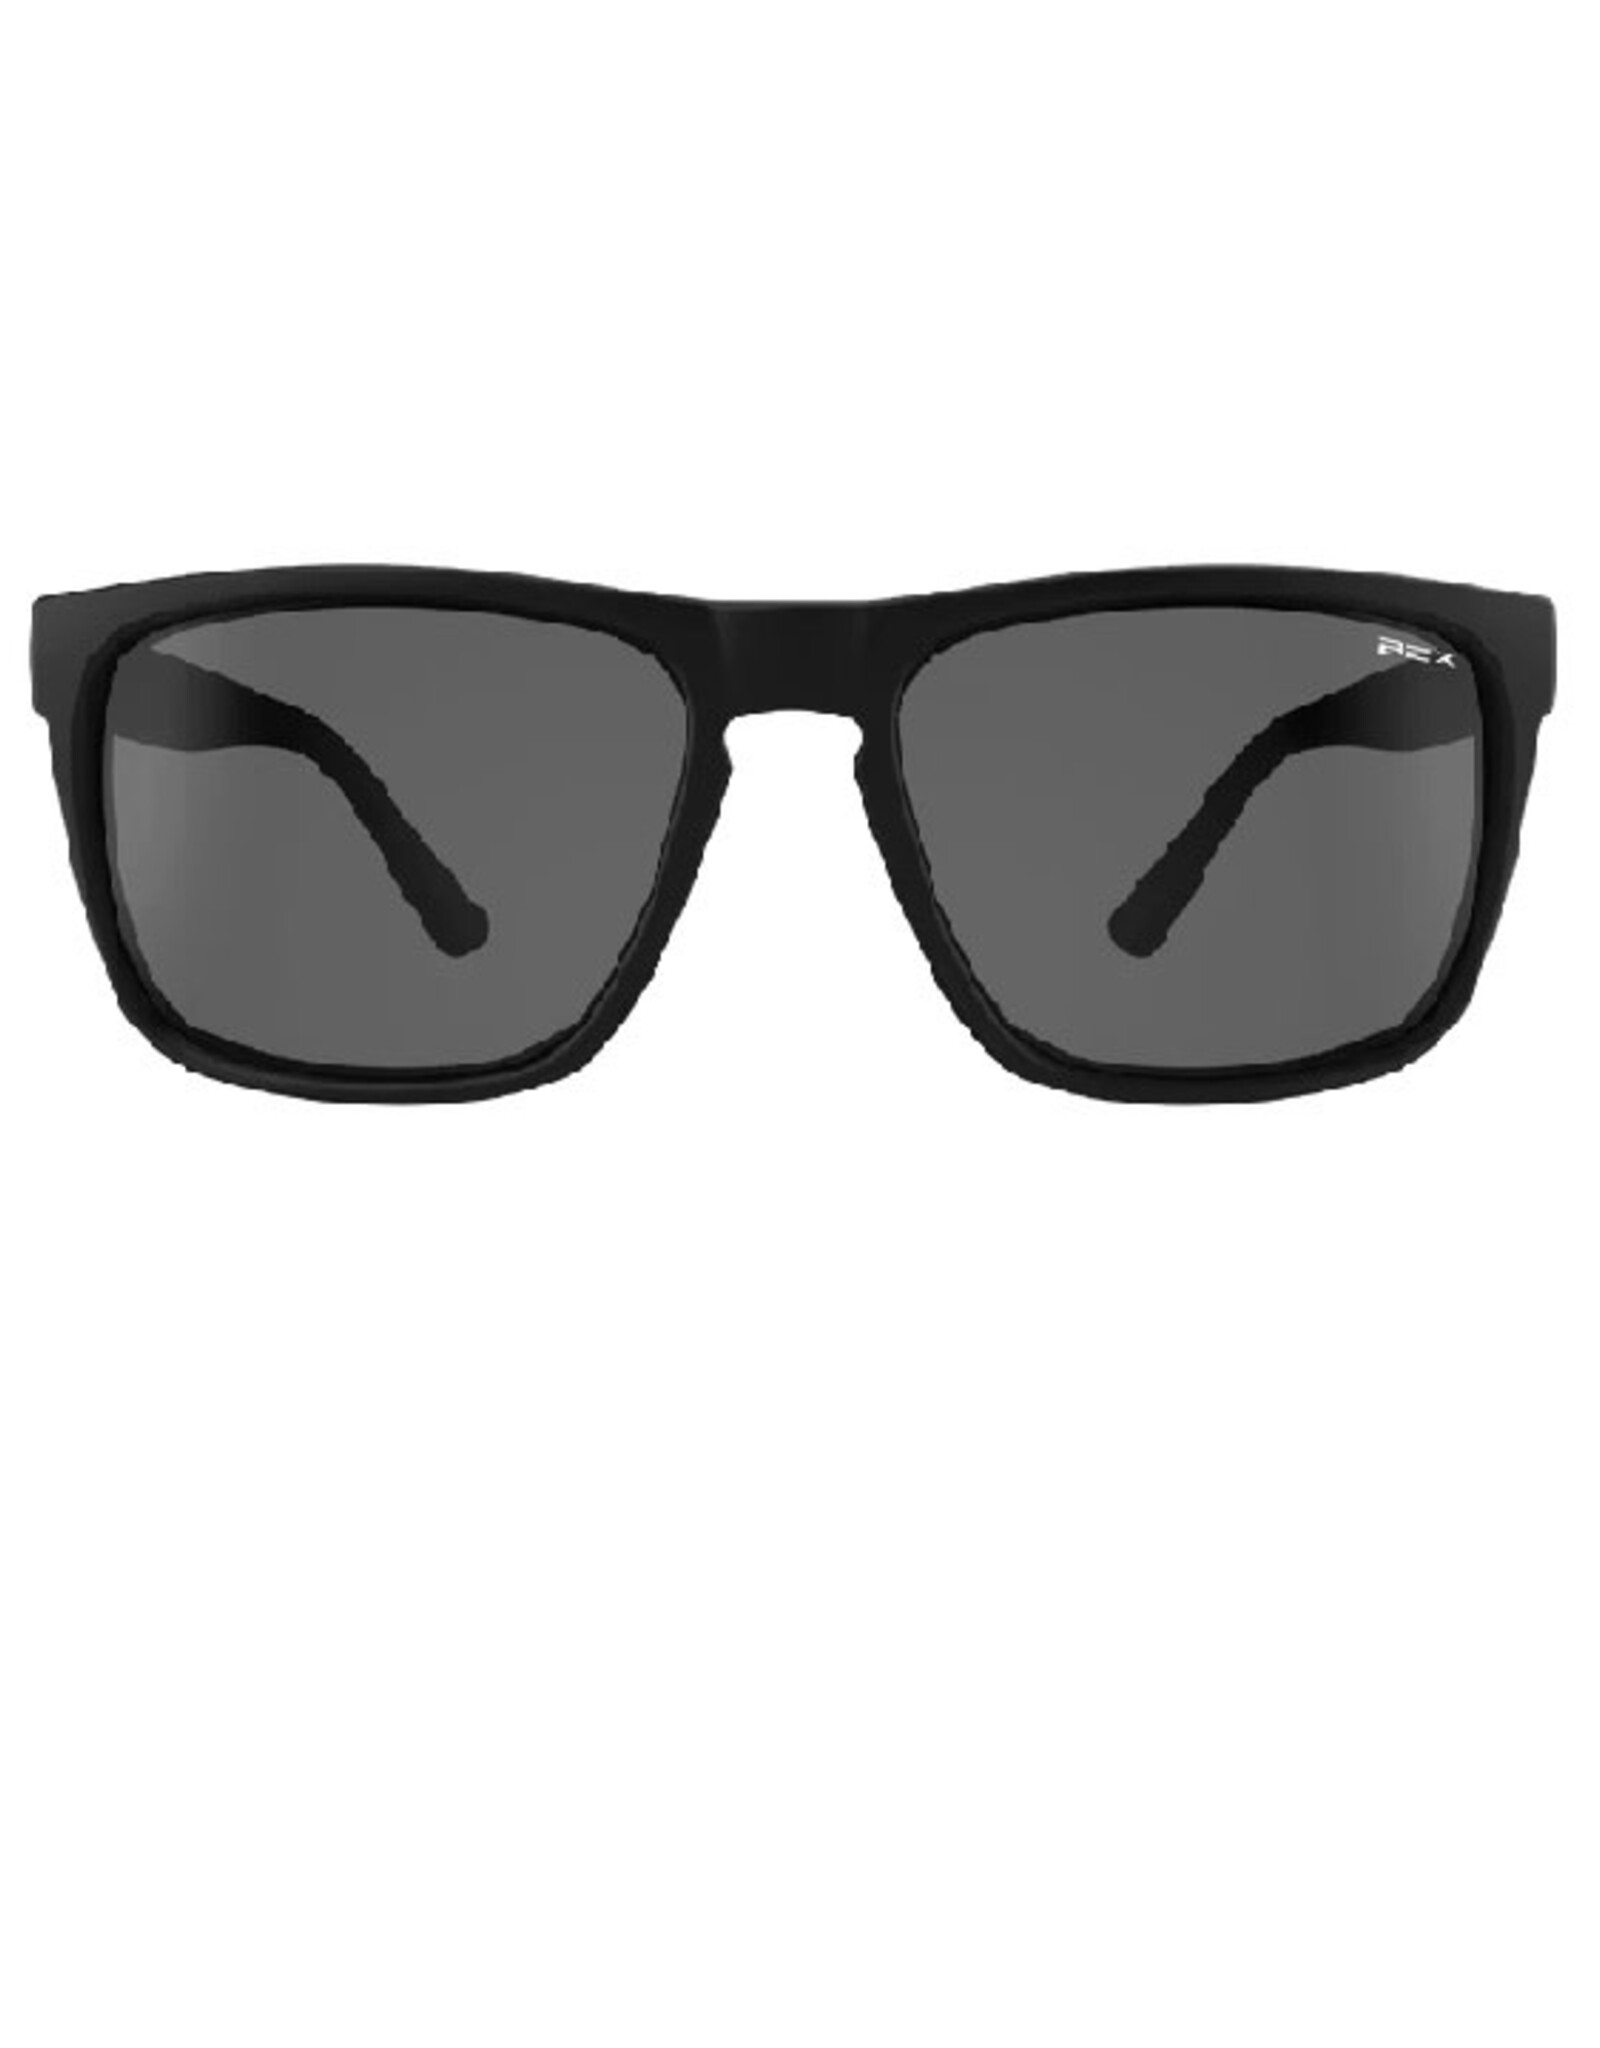 BEX BEX JAEBYRD OTG Sunglasses Black / Gray